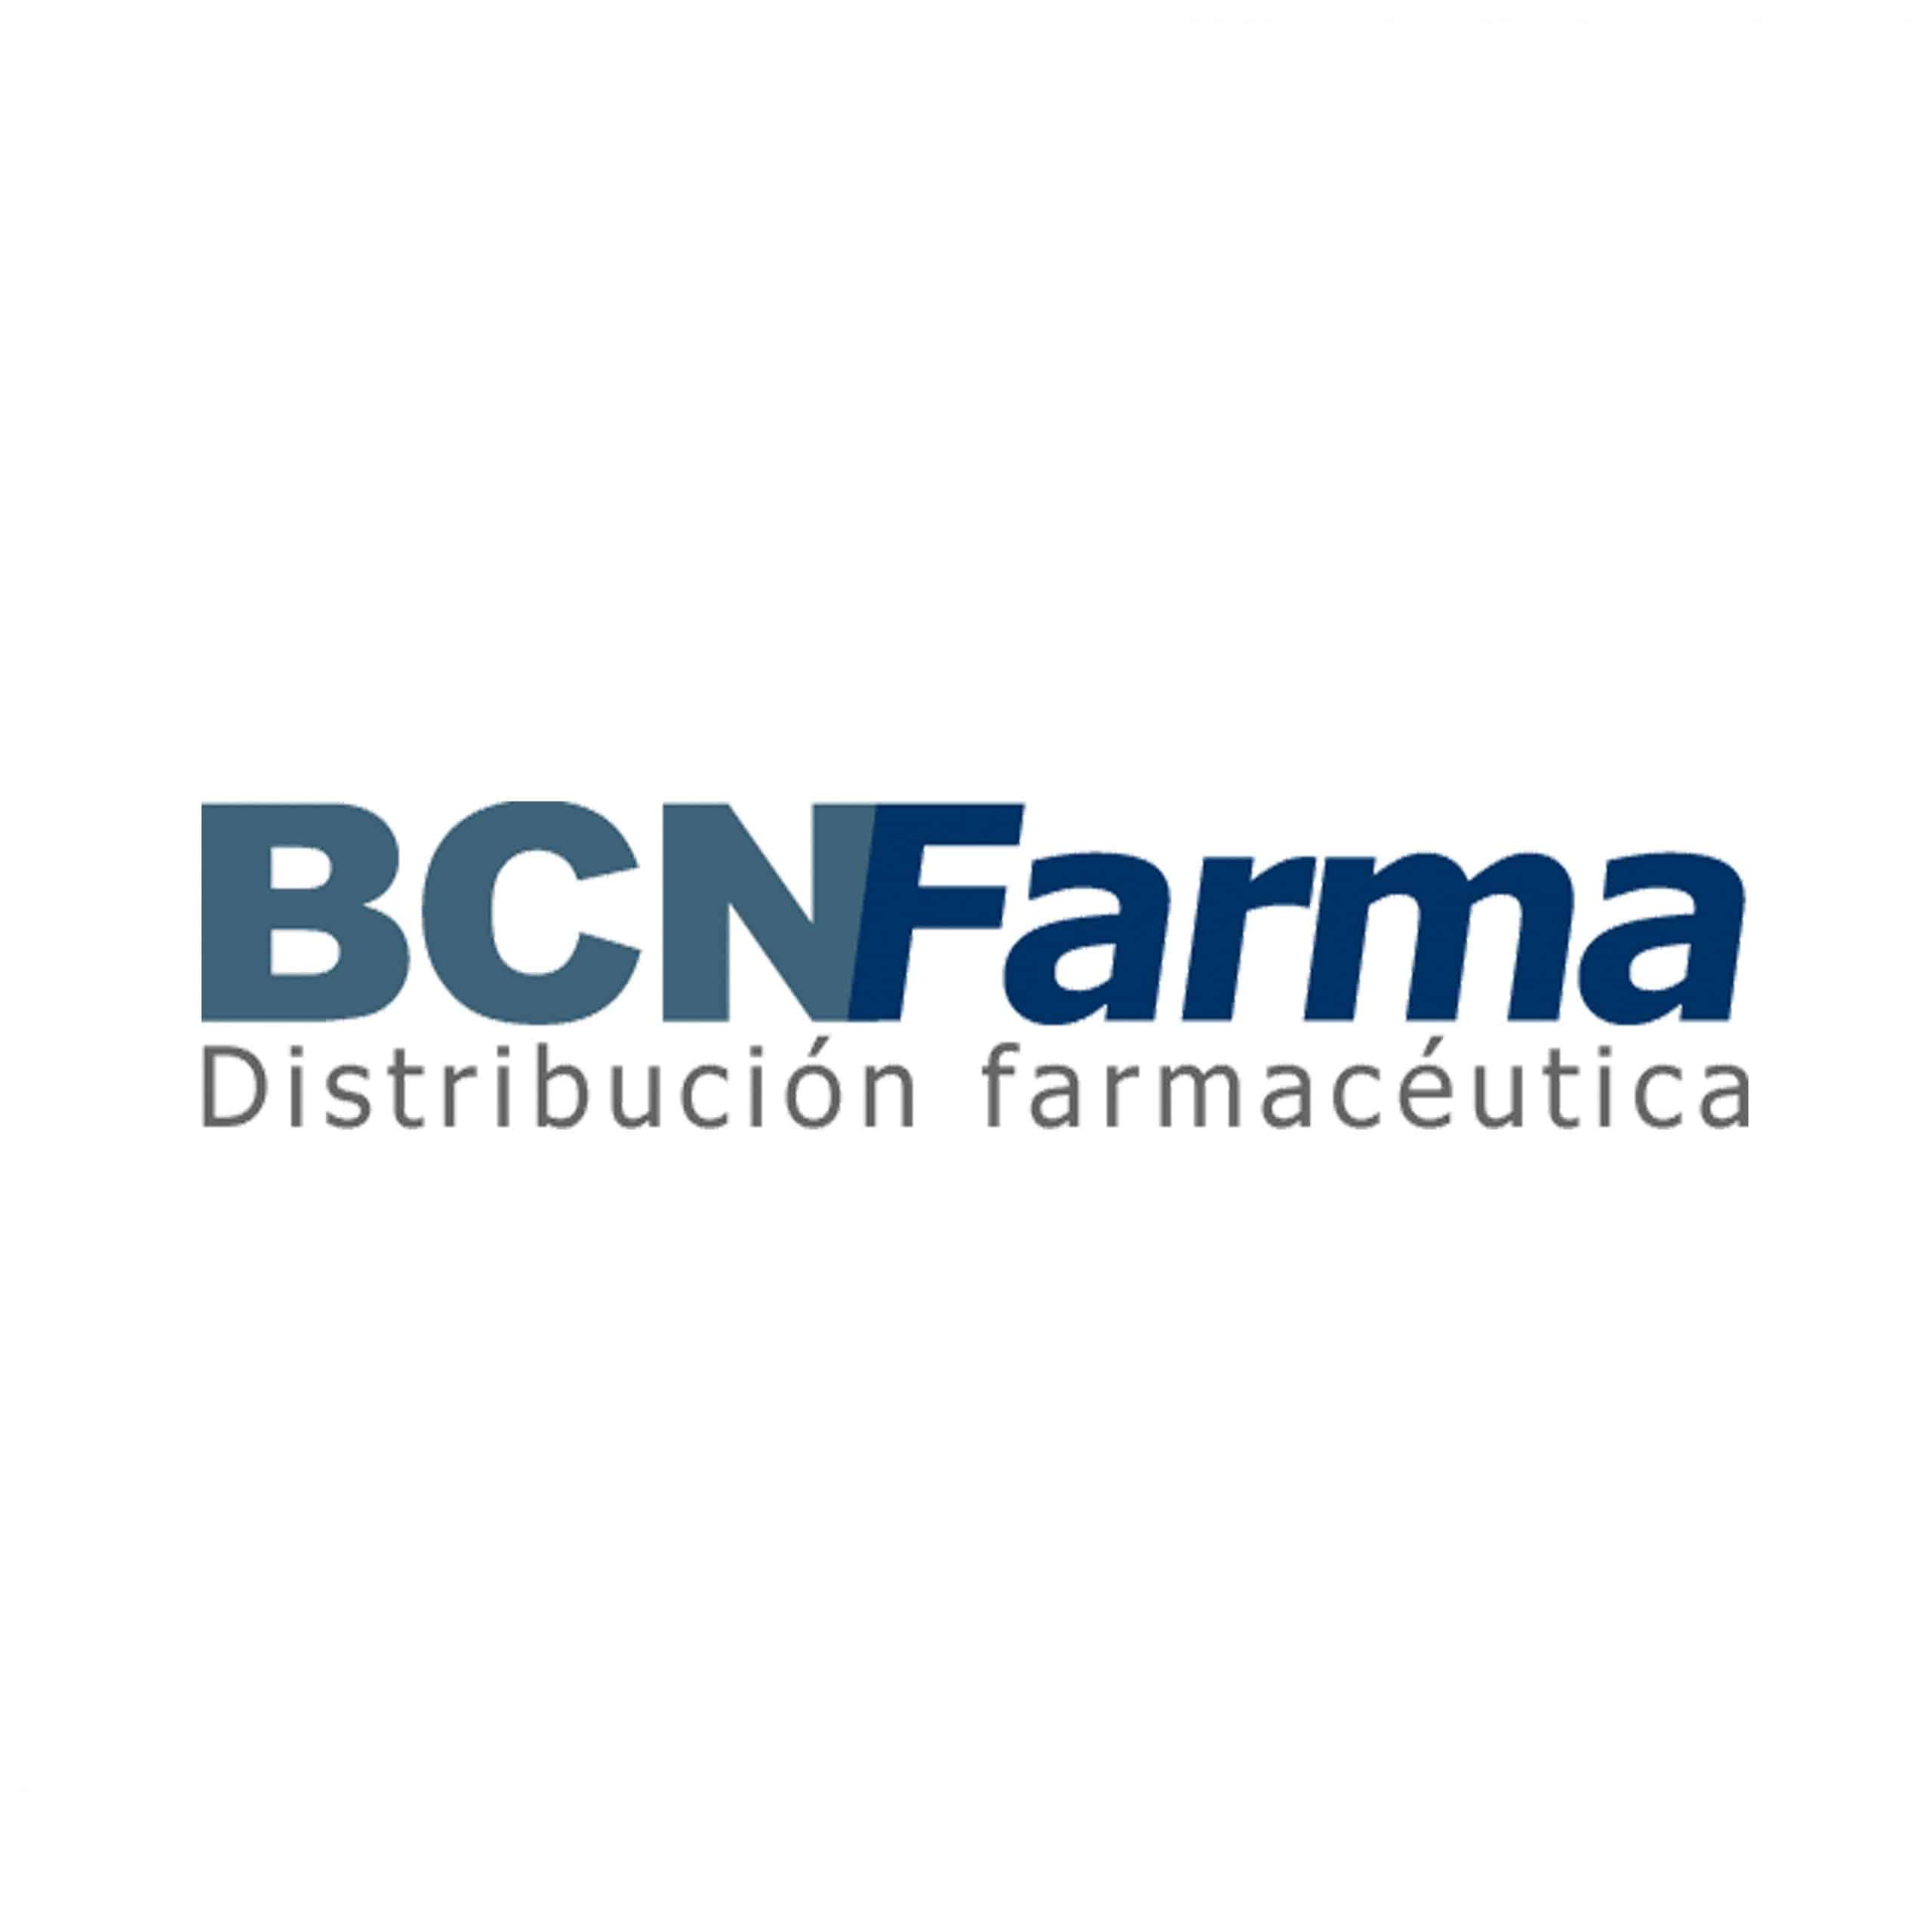 BCNfarma